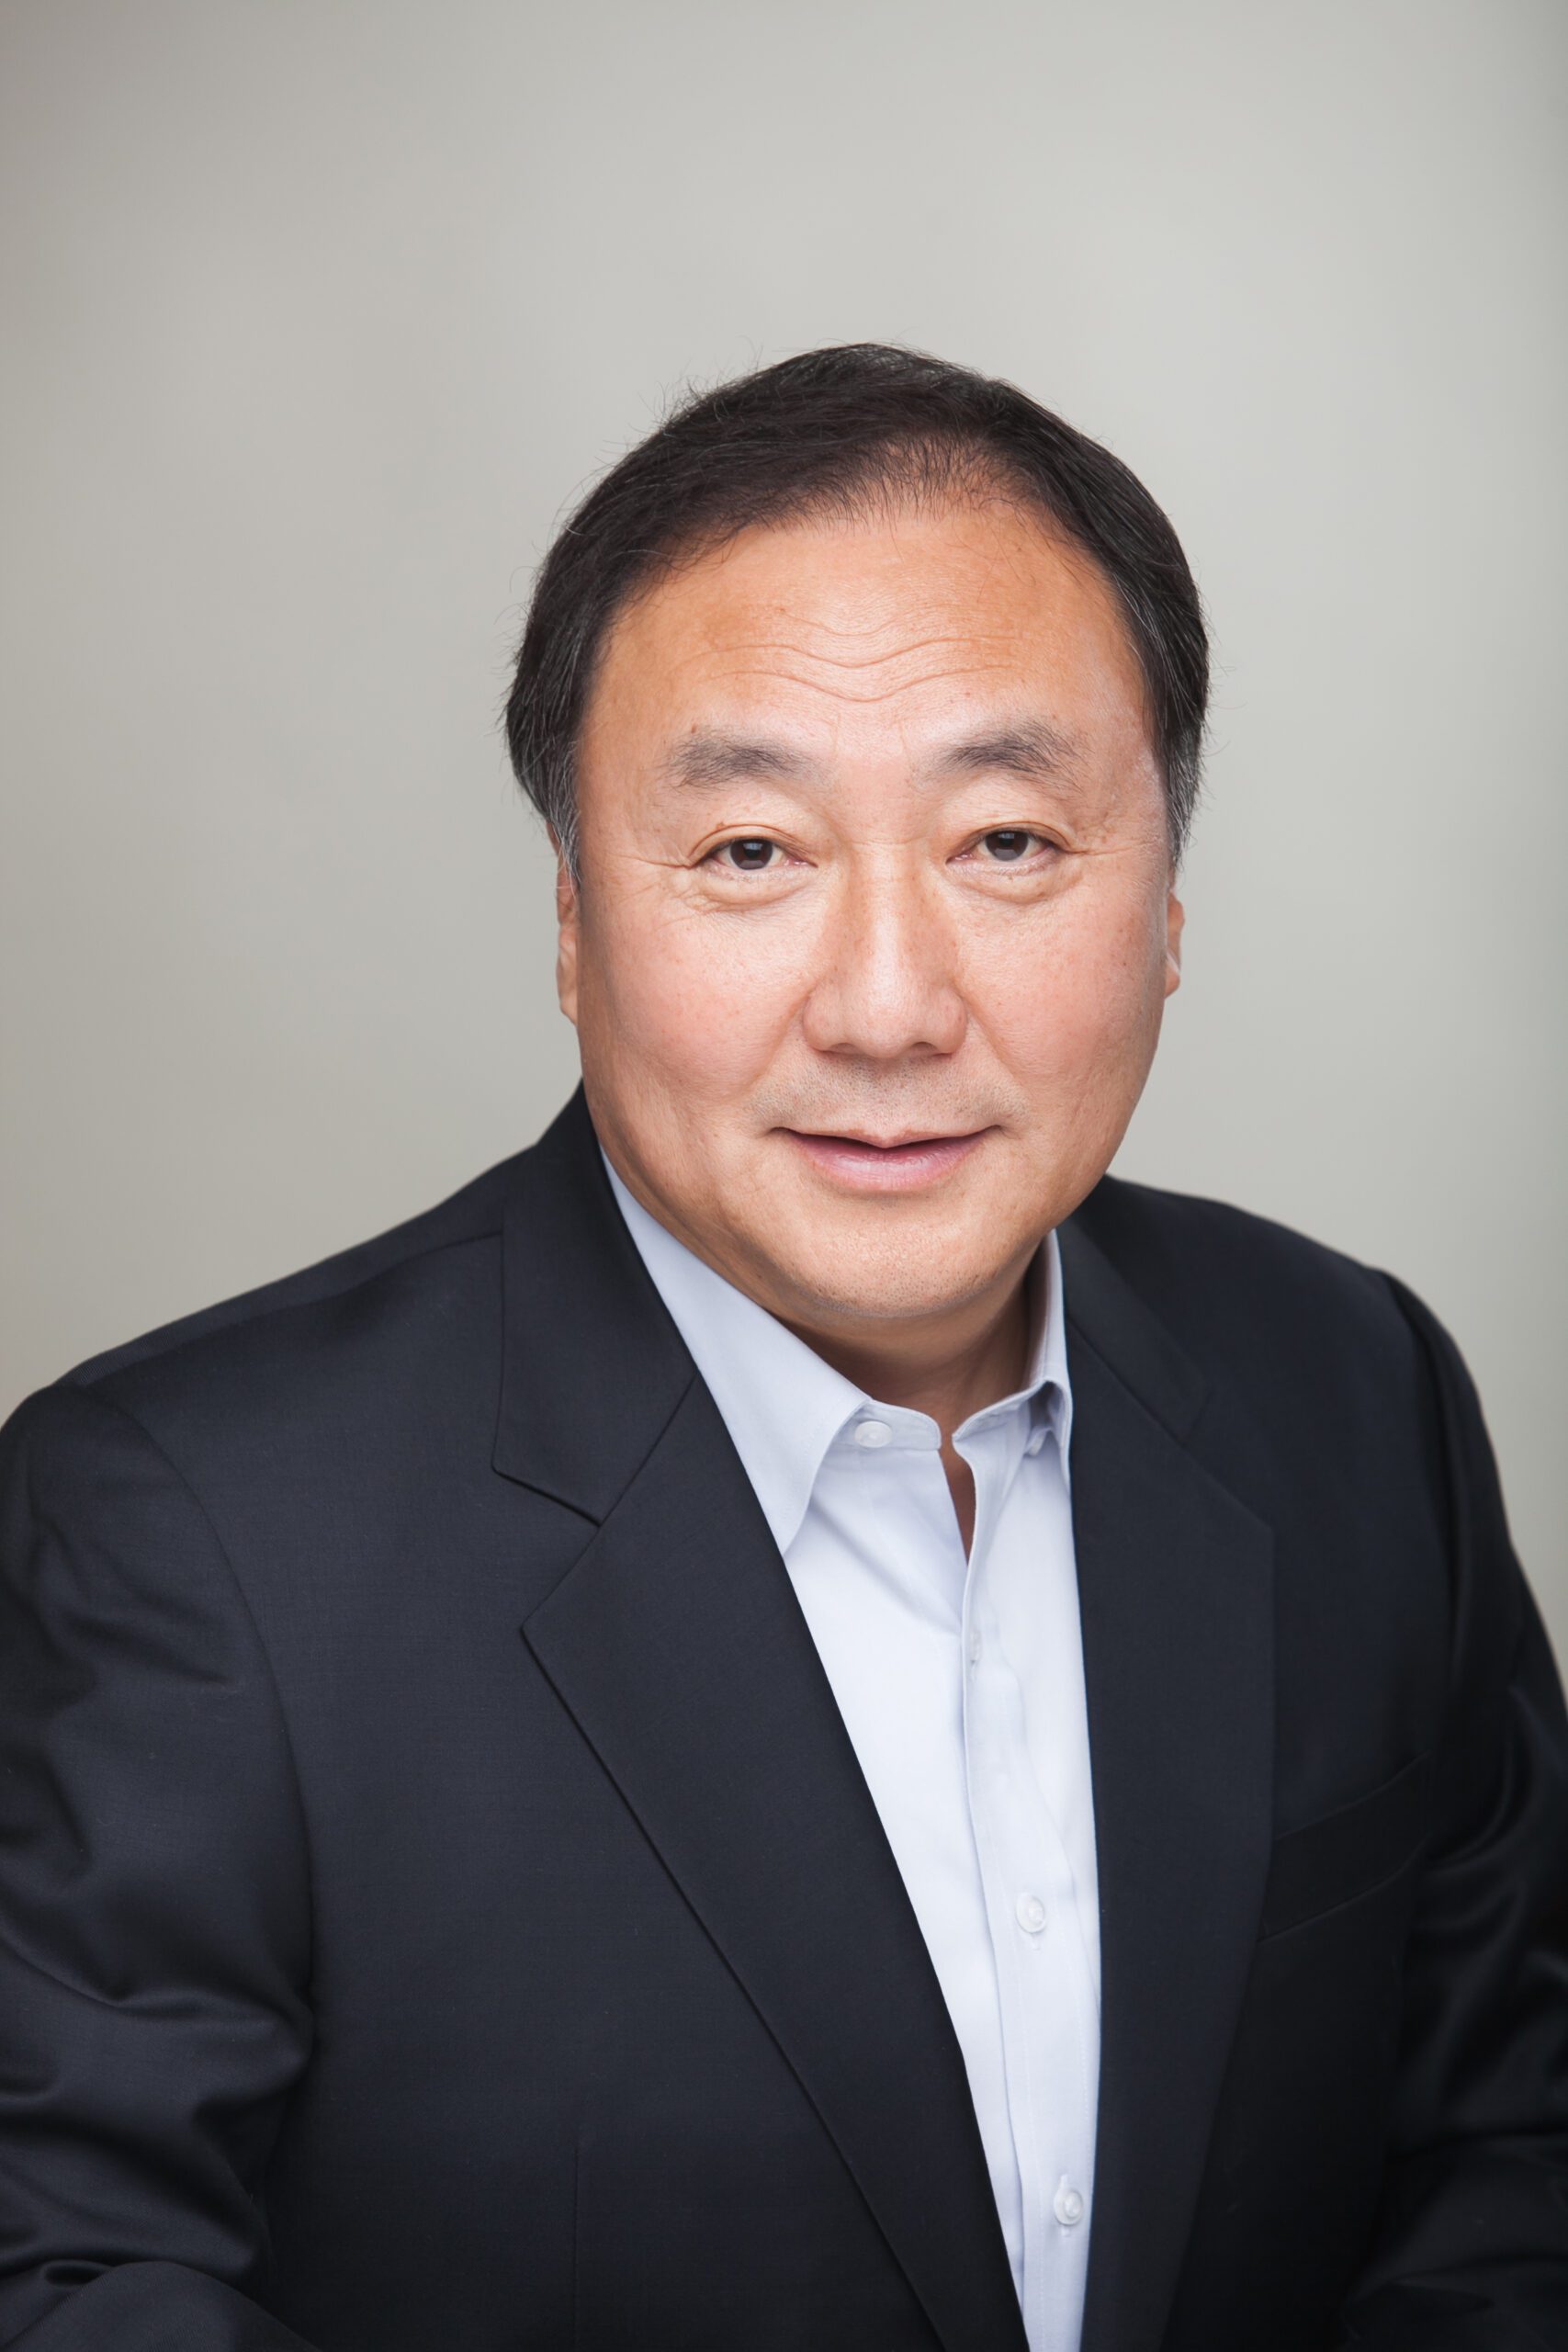 CEO of Scenera, David D Lee